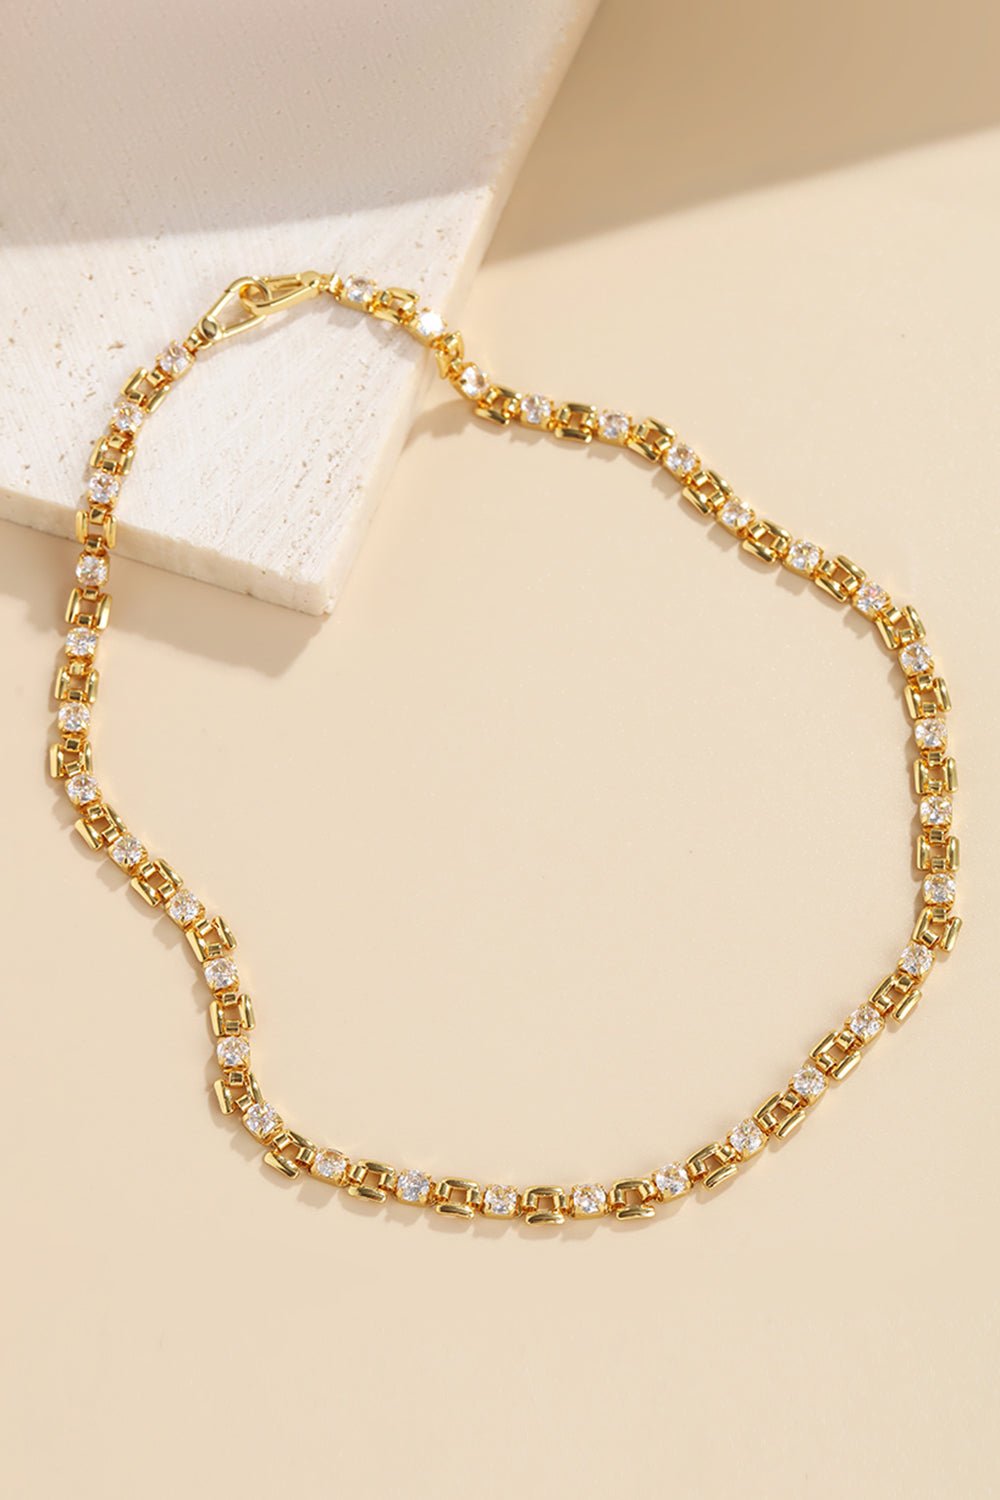 Zircon Decor Copper Necklace - Fashion Girl Online Store